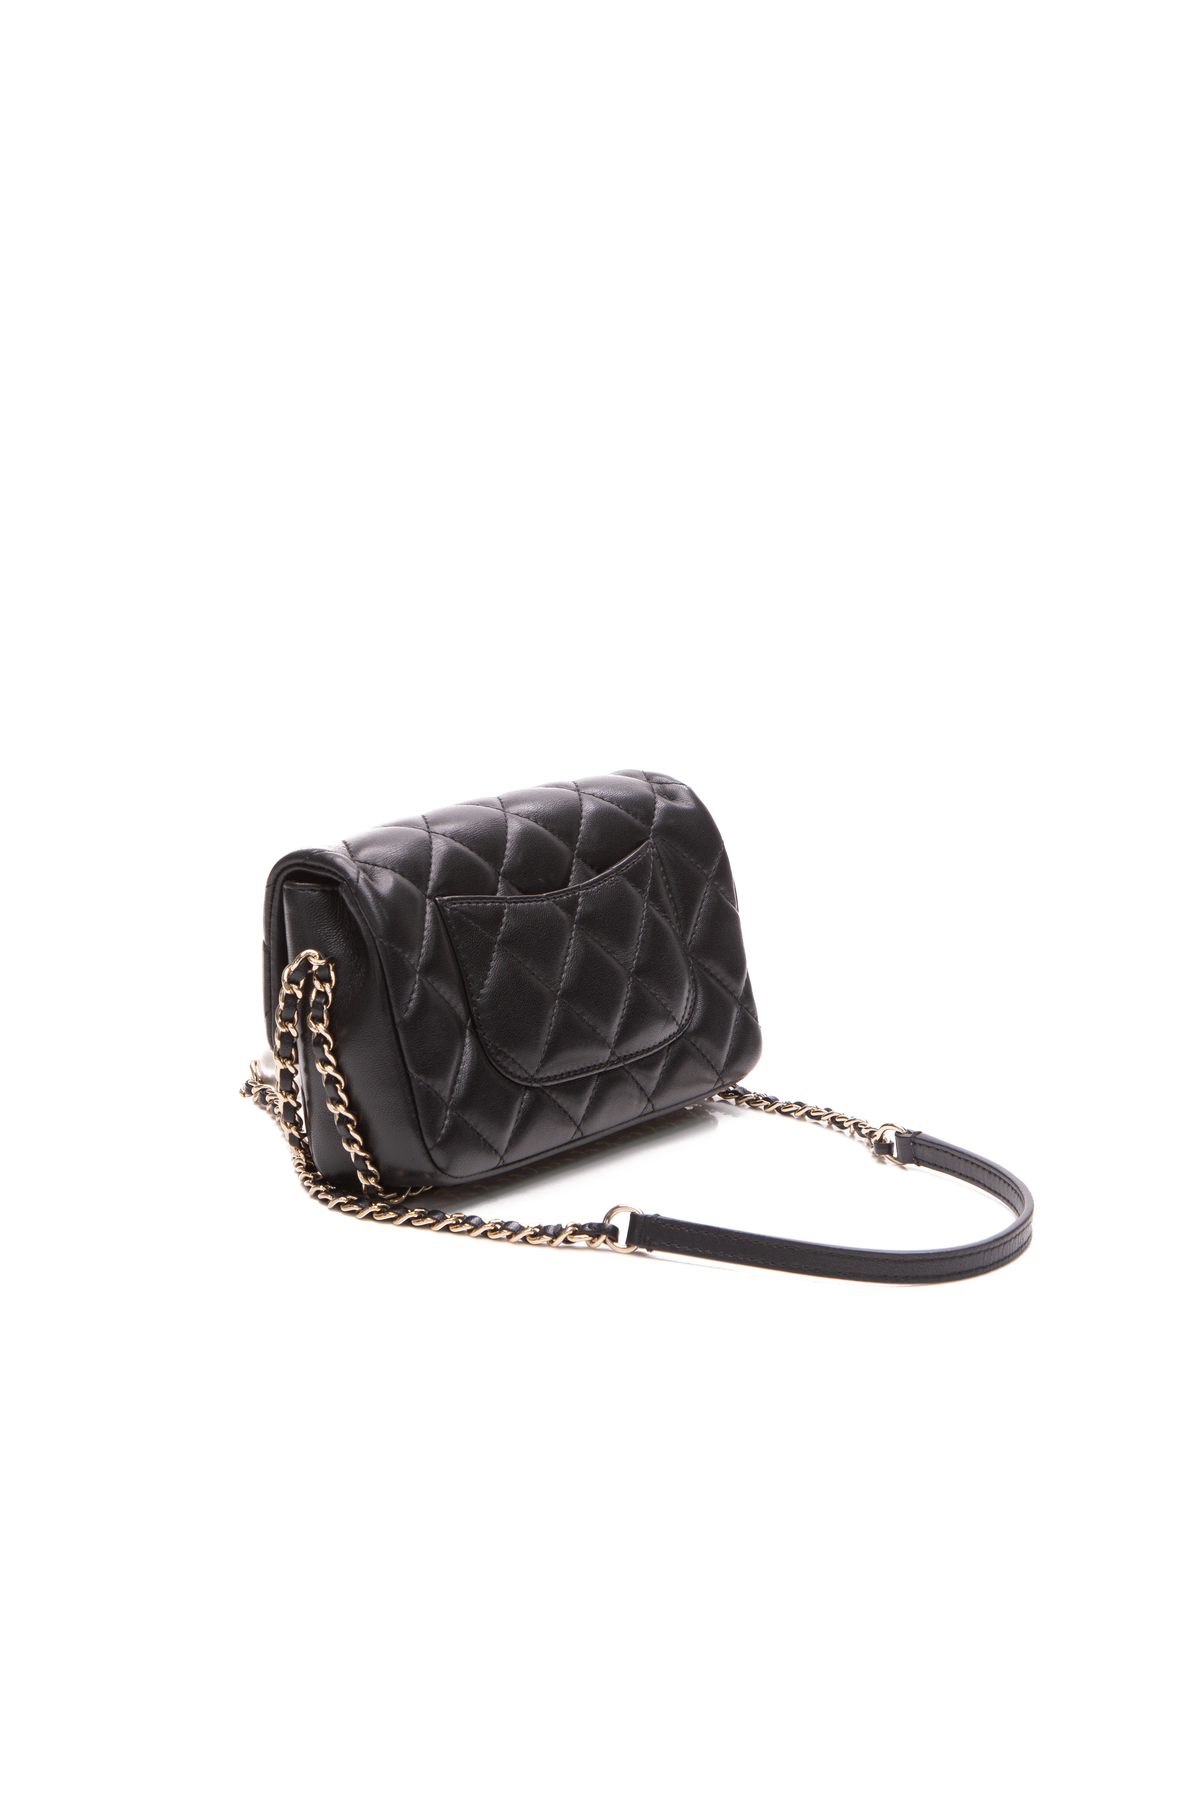 Chanel My Precious Pearl Mini Flap Bag - Couture USA